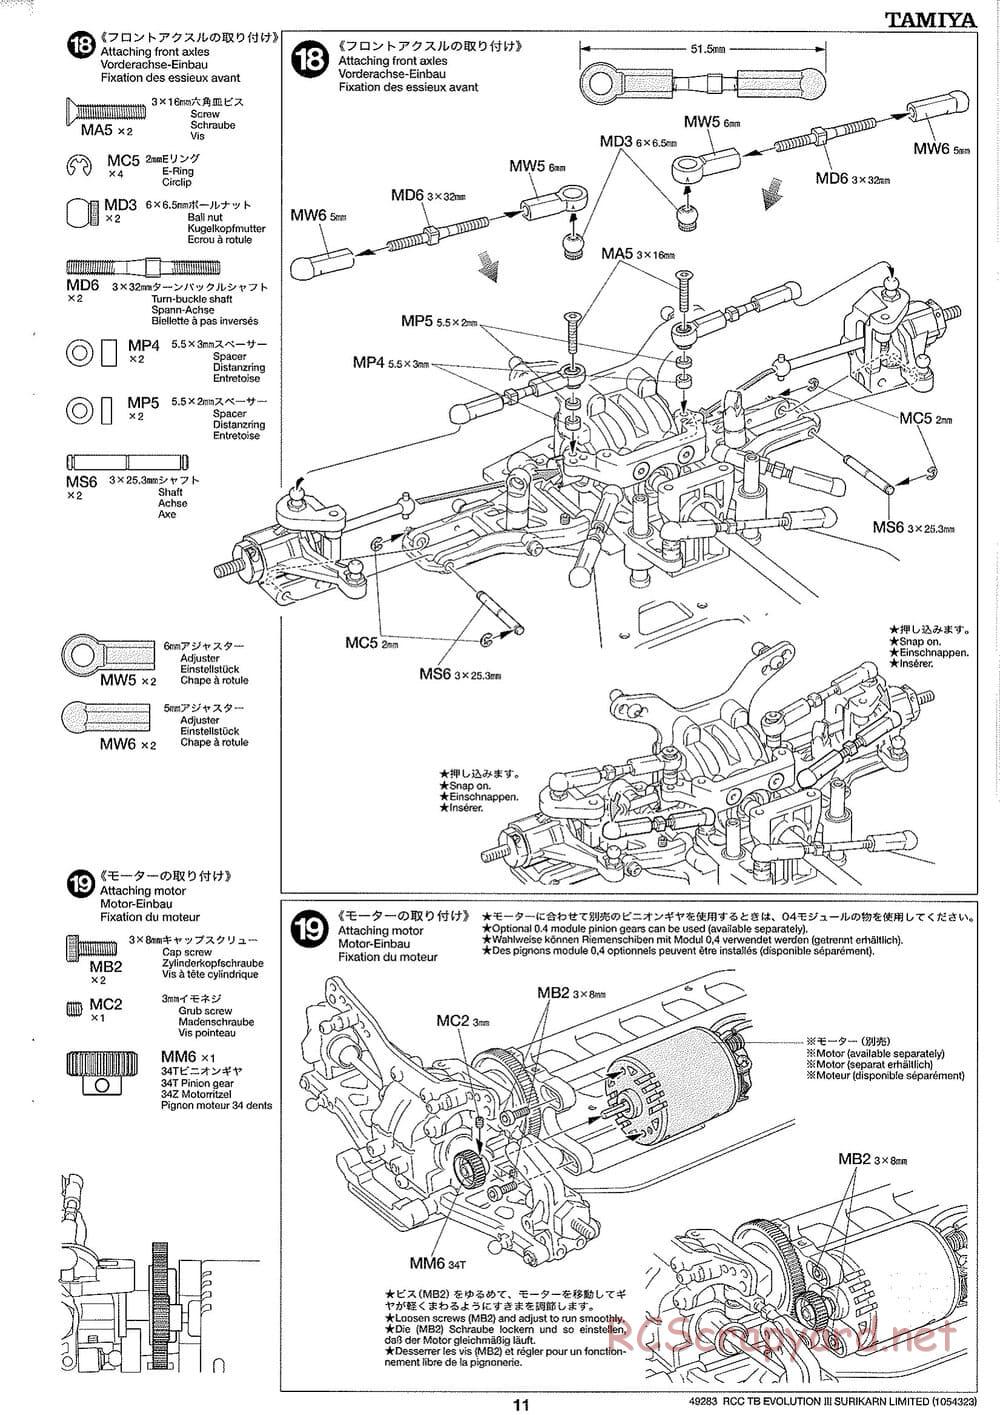 Tamiya - TB Evolution III Surikarn Limited Chassis - Manual - Page 11